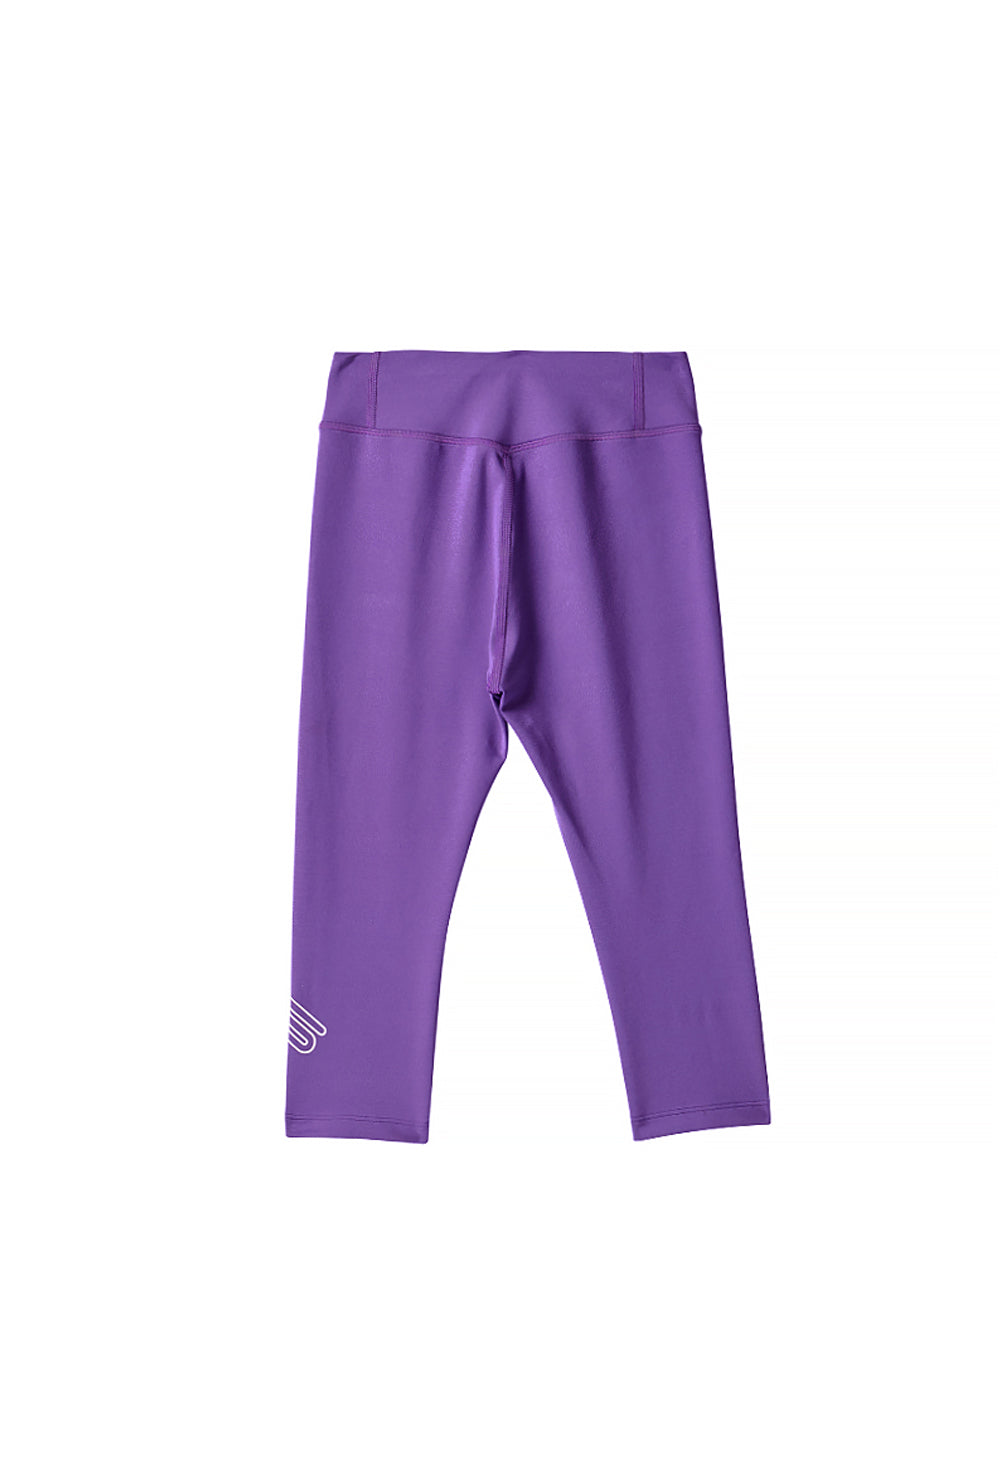 XELLA Kids Capri Leggings 7 - Woolly Purple